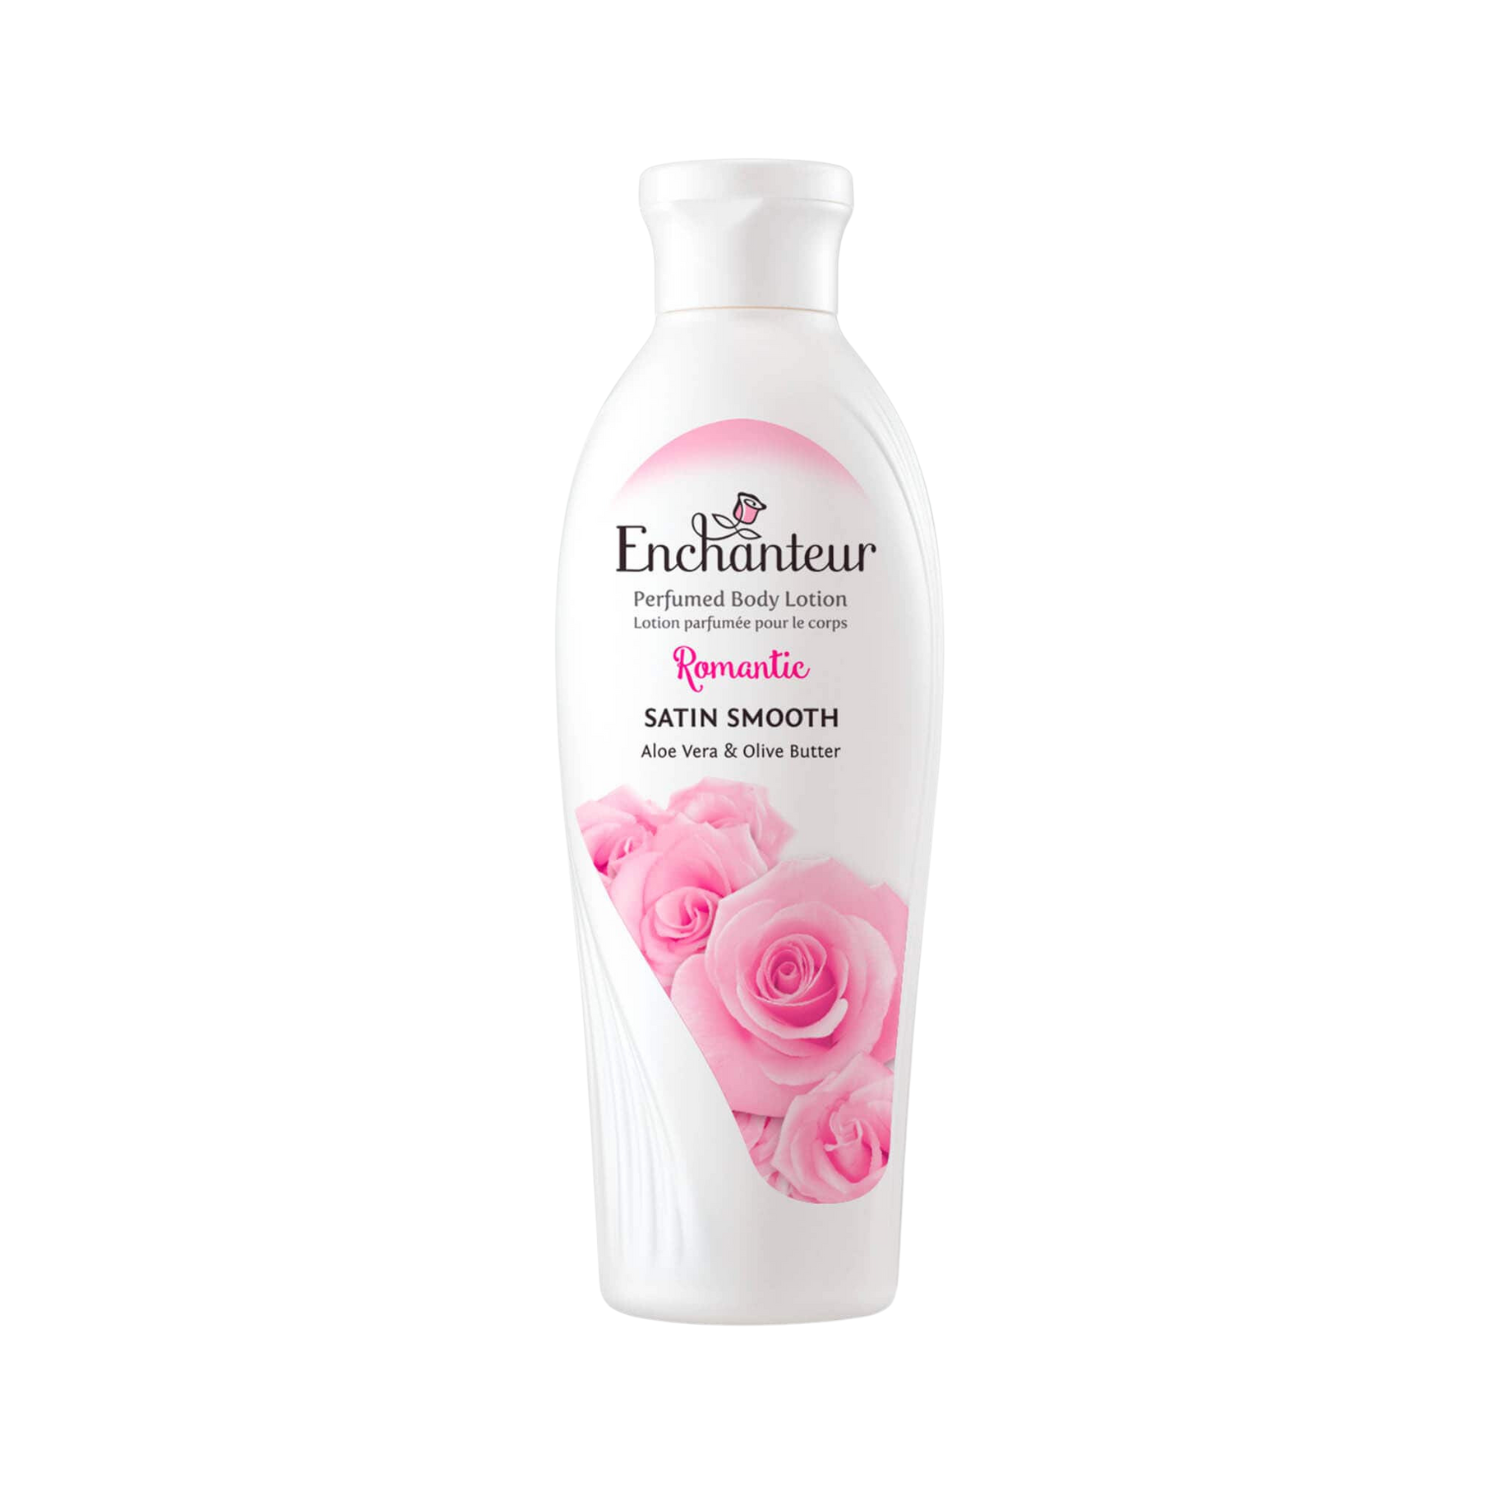 enchanteur-perfumed-body-lotion-romantic-100ml